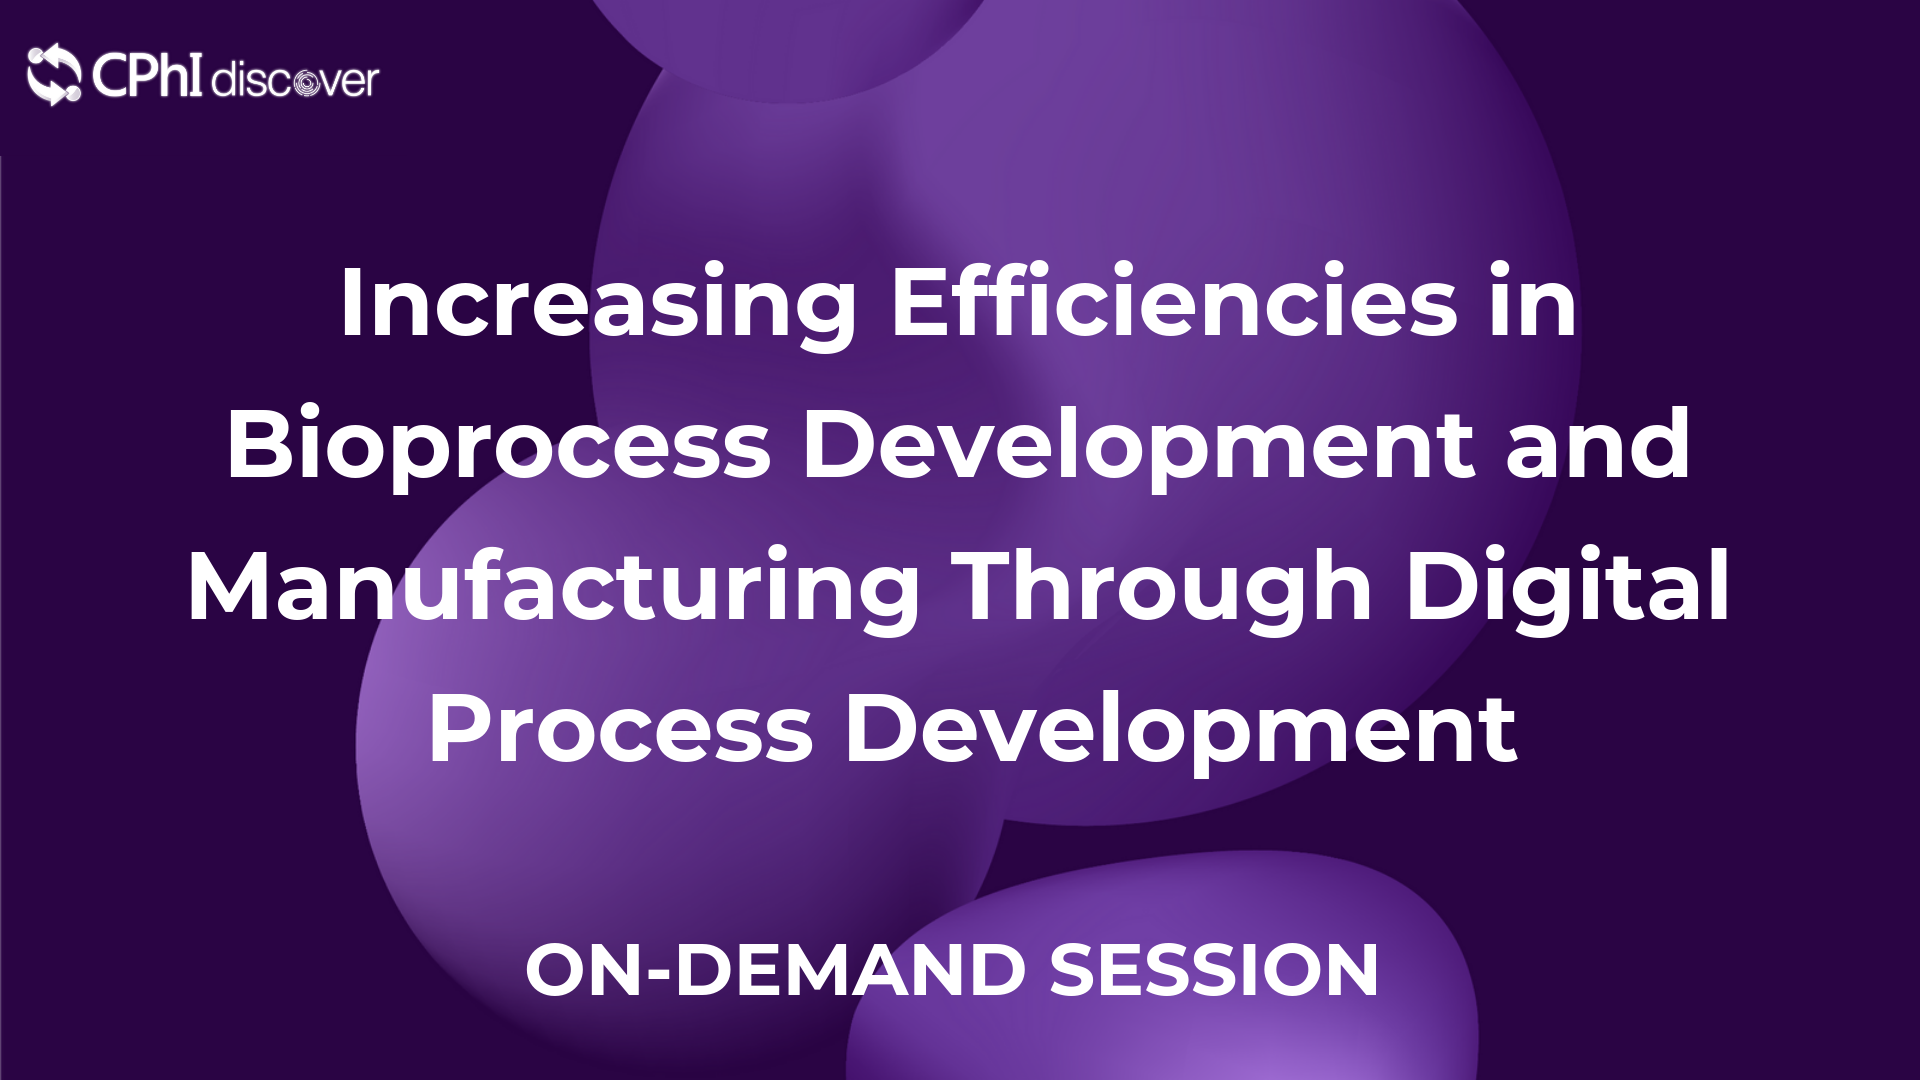 Increasing efficiencies in bioprocess development and manufacturing through digital process development